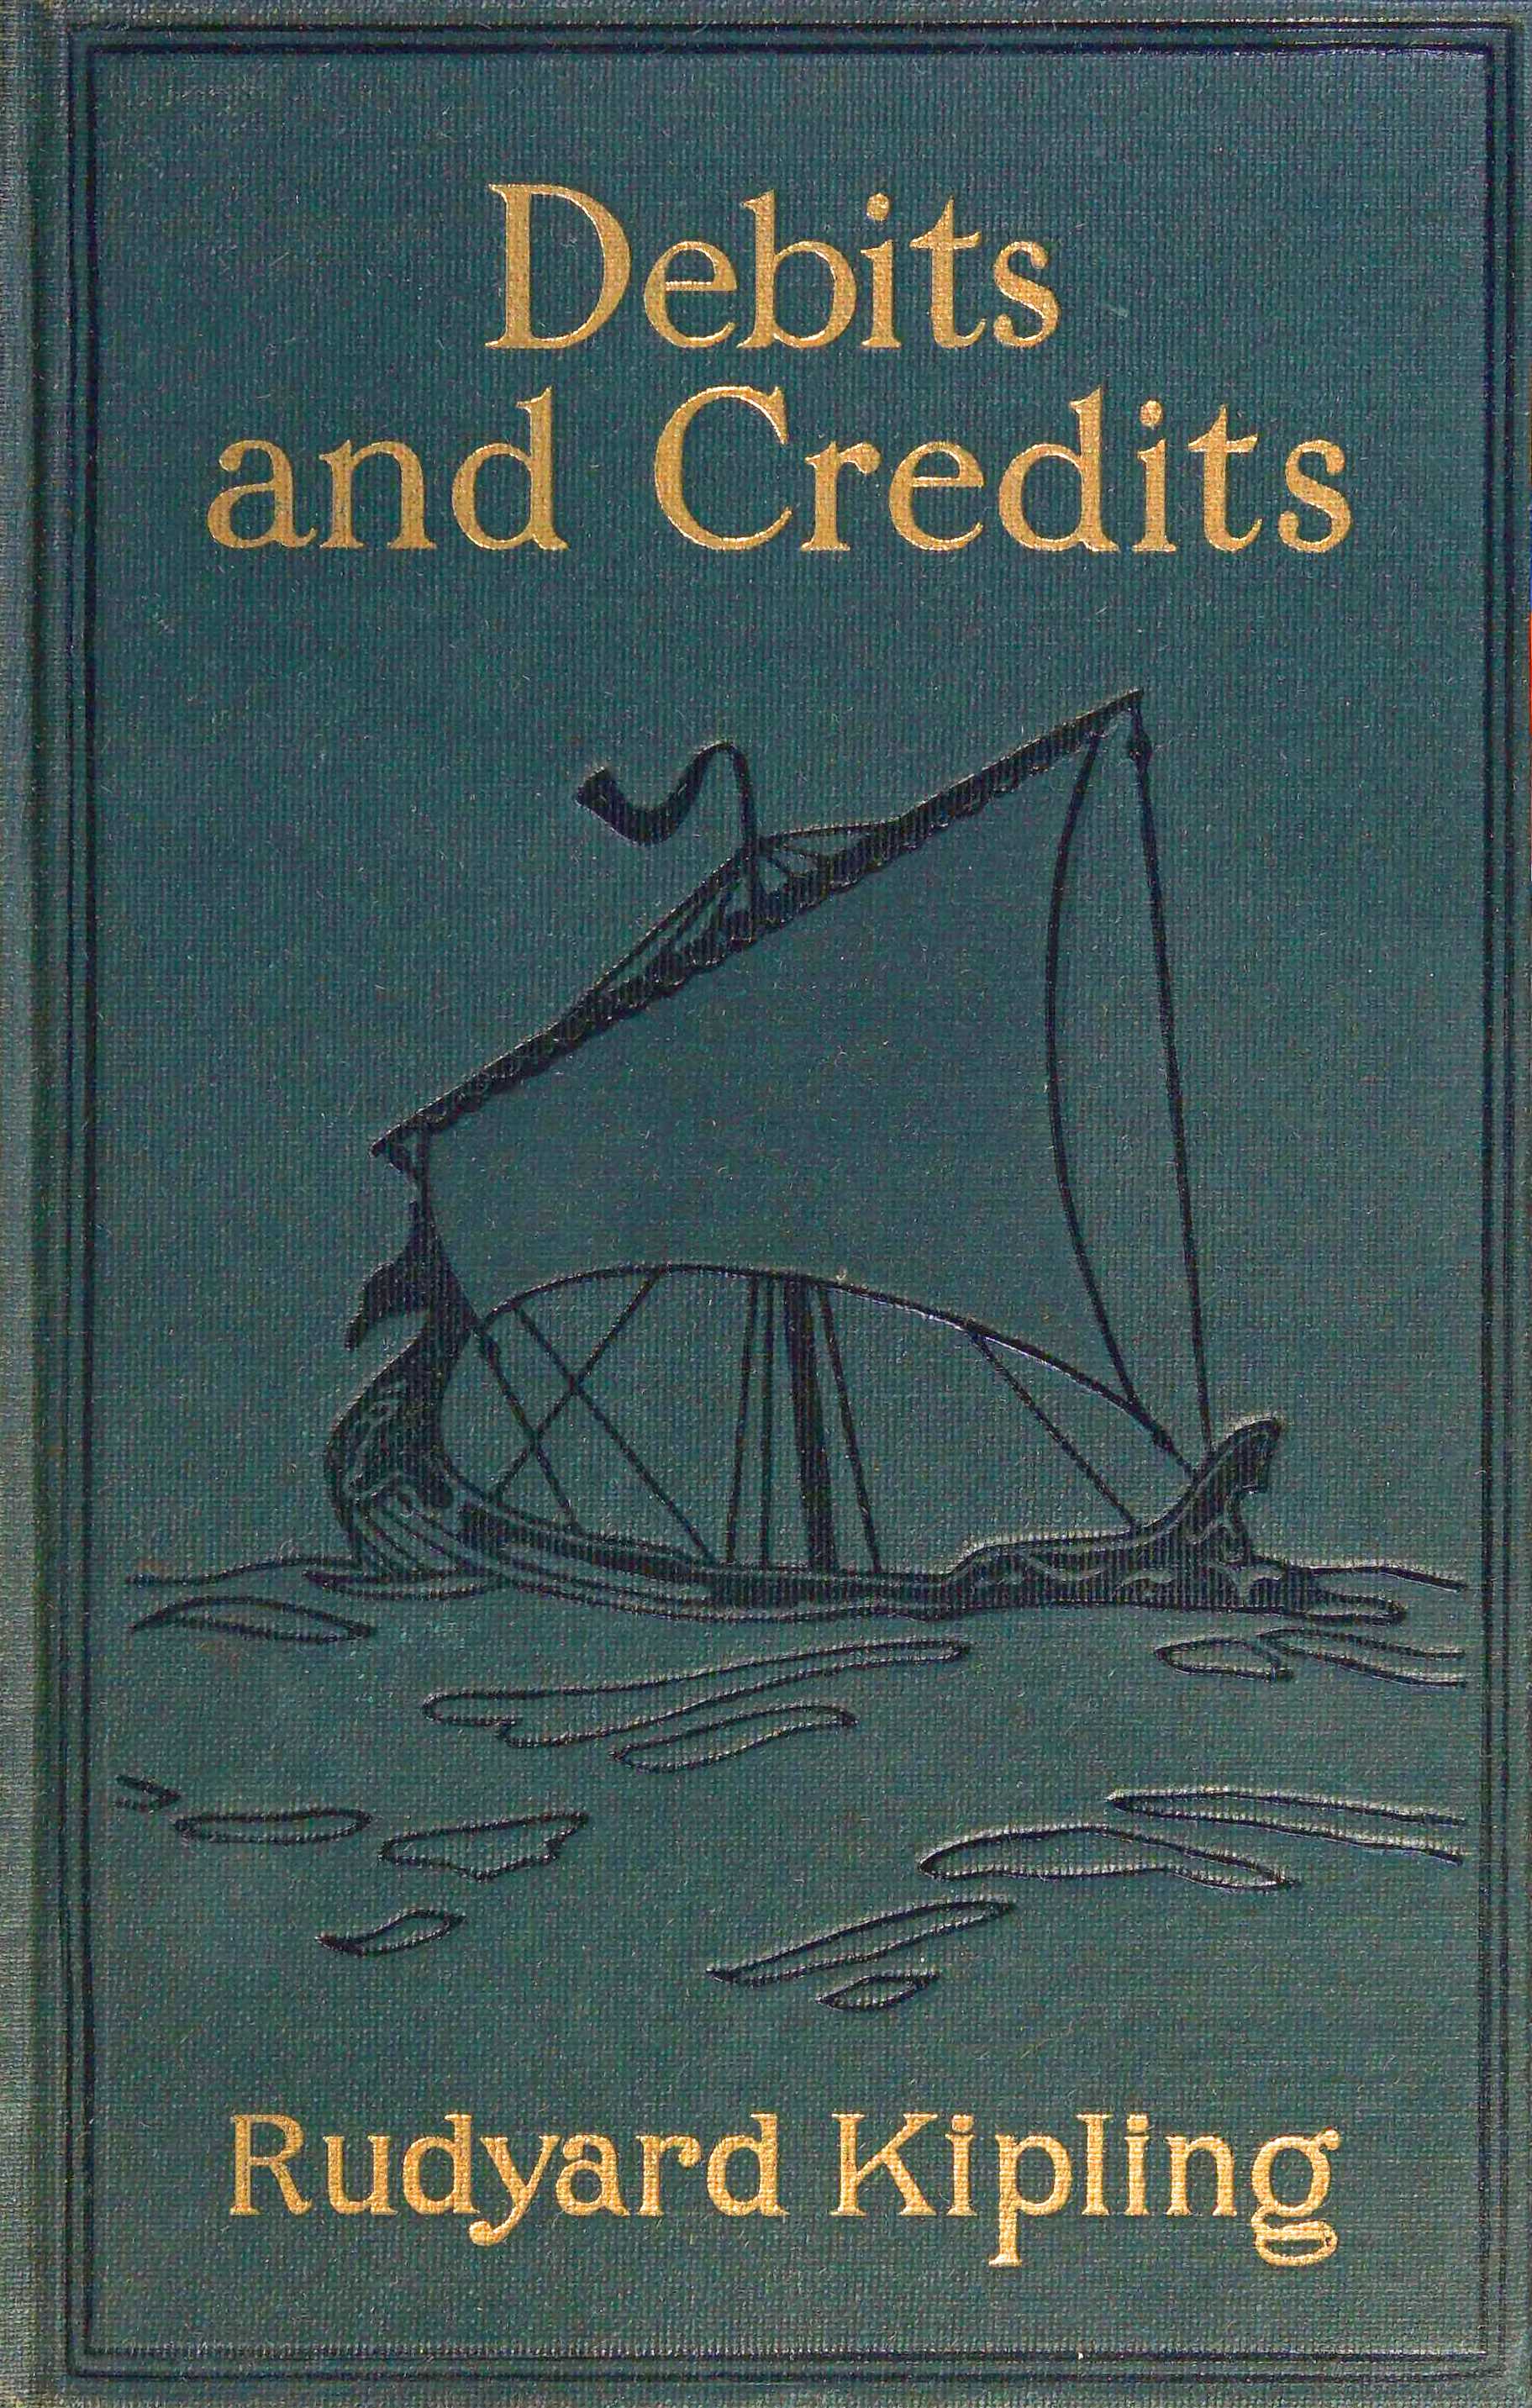 Of Sea and Shadow (The Elder Empire - Sea Book 1) (English Edition) -  eBooks em Inglês na